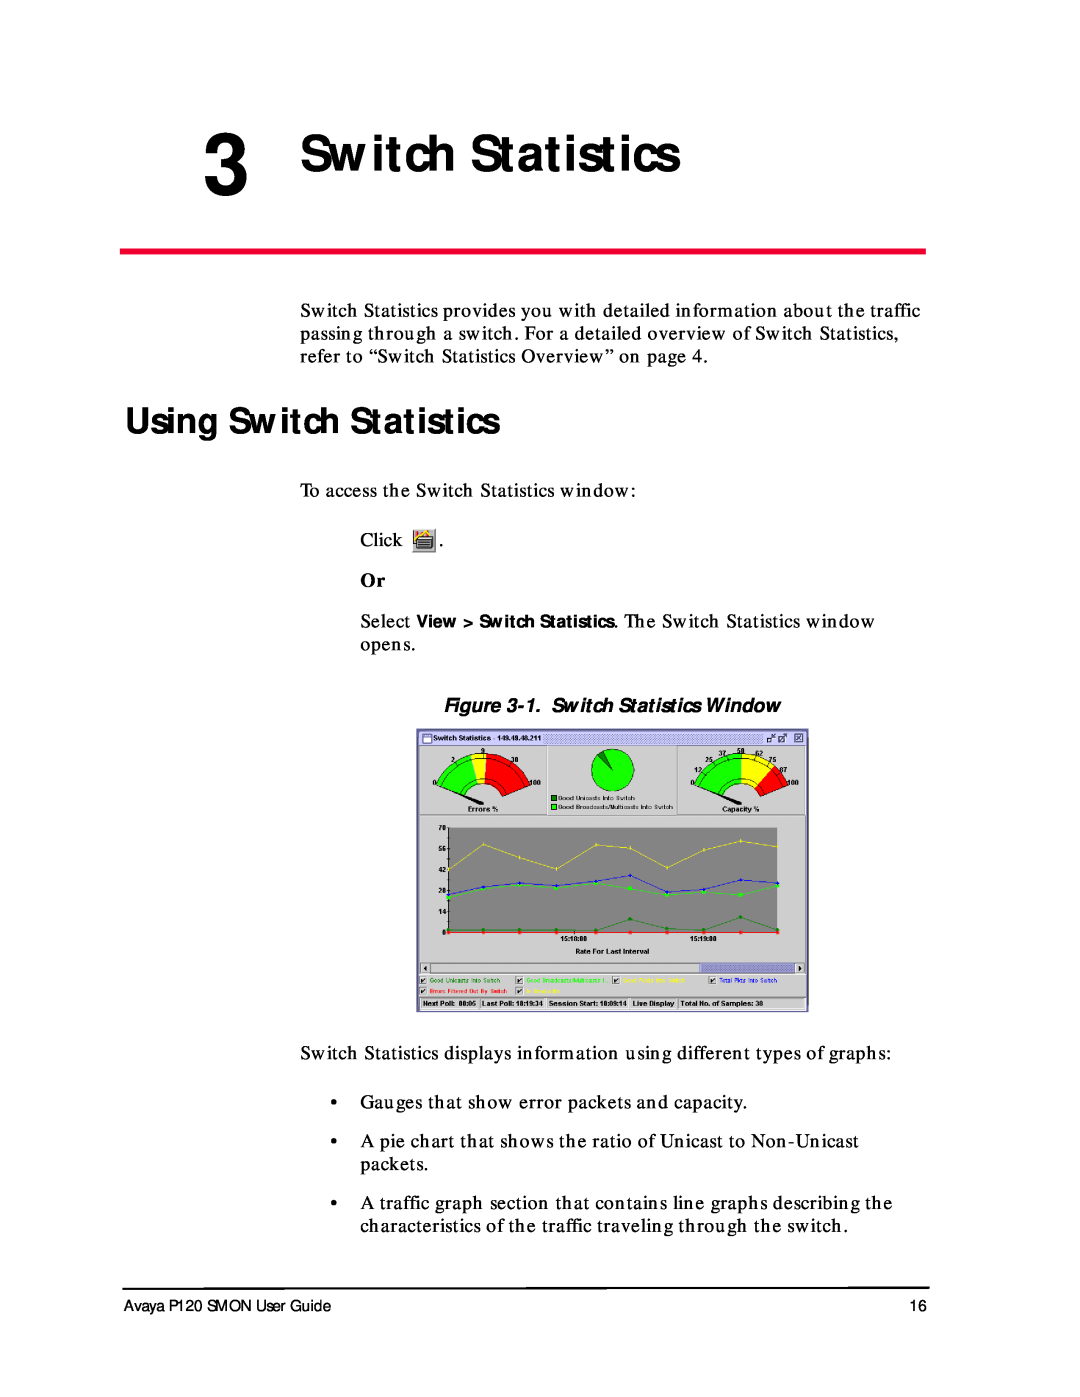 Avaya P120 SMON manual Using Switch Statistics, 1. Switch Statistics Window 